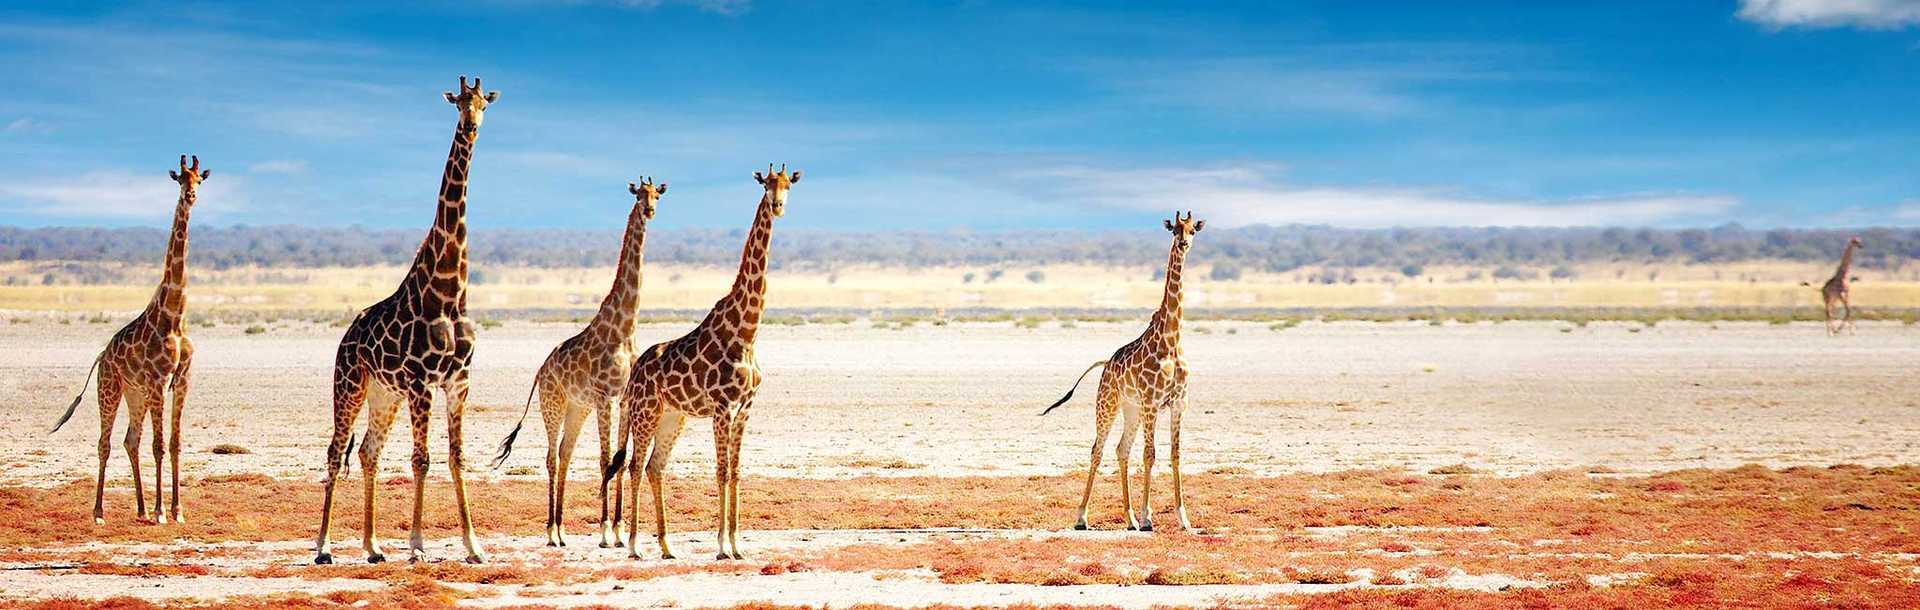 Namibia Safari - Giraffe herd in Etosha National Park